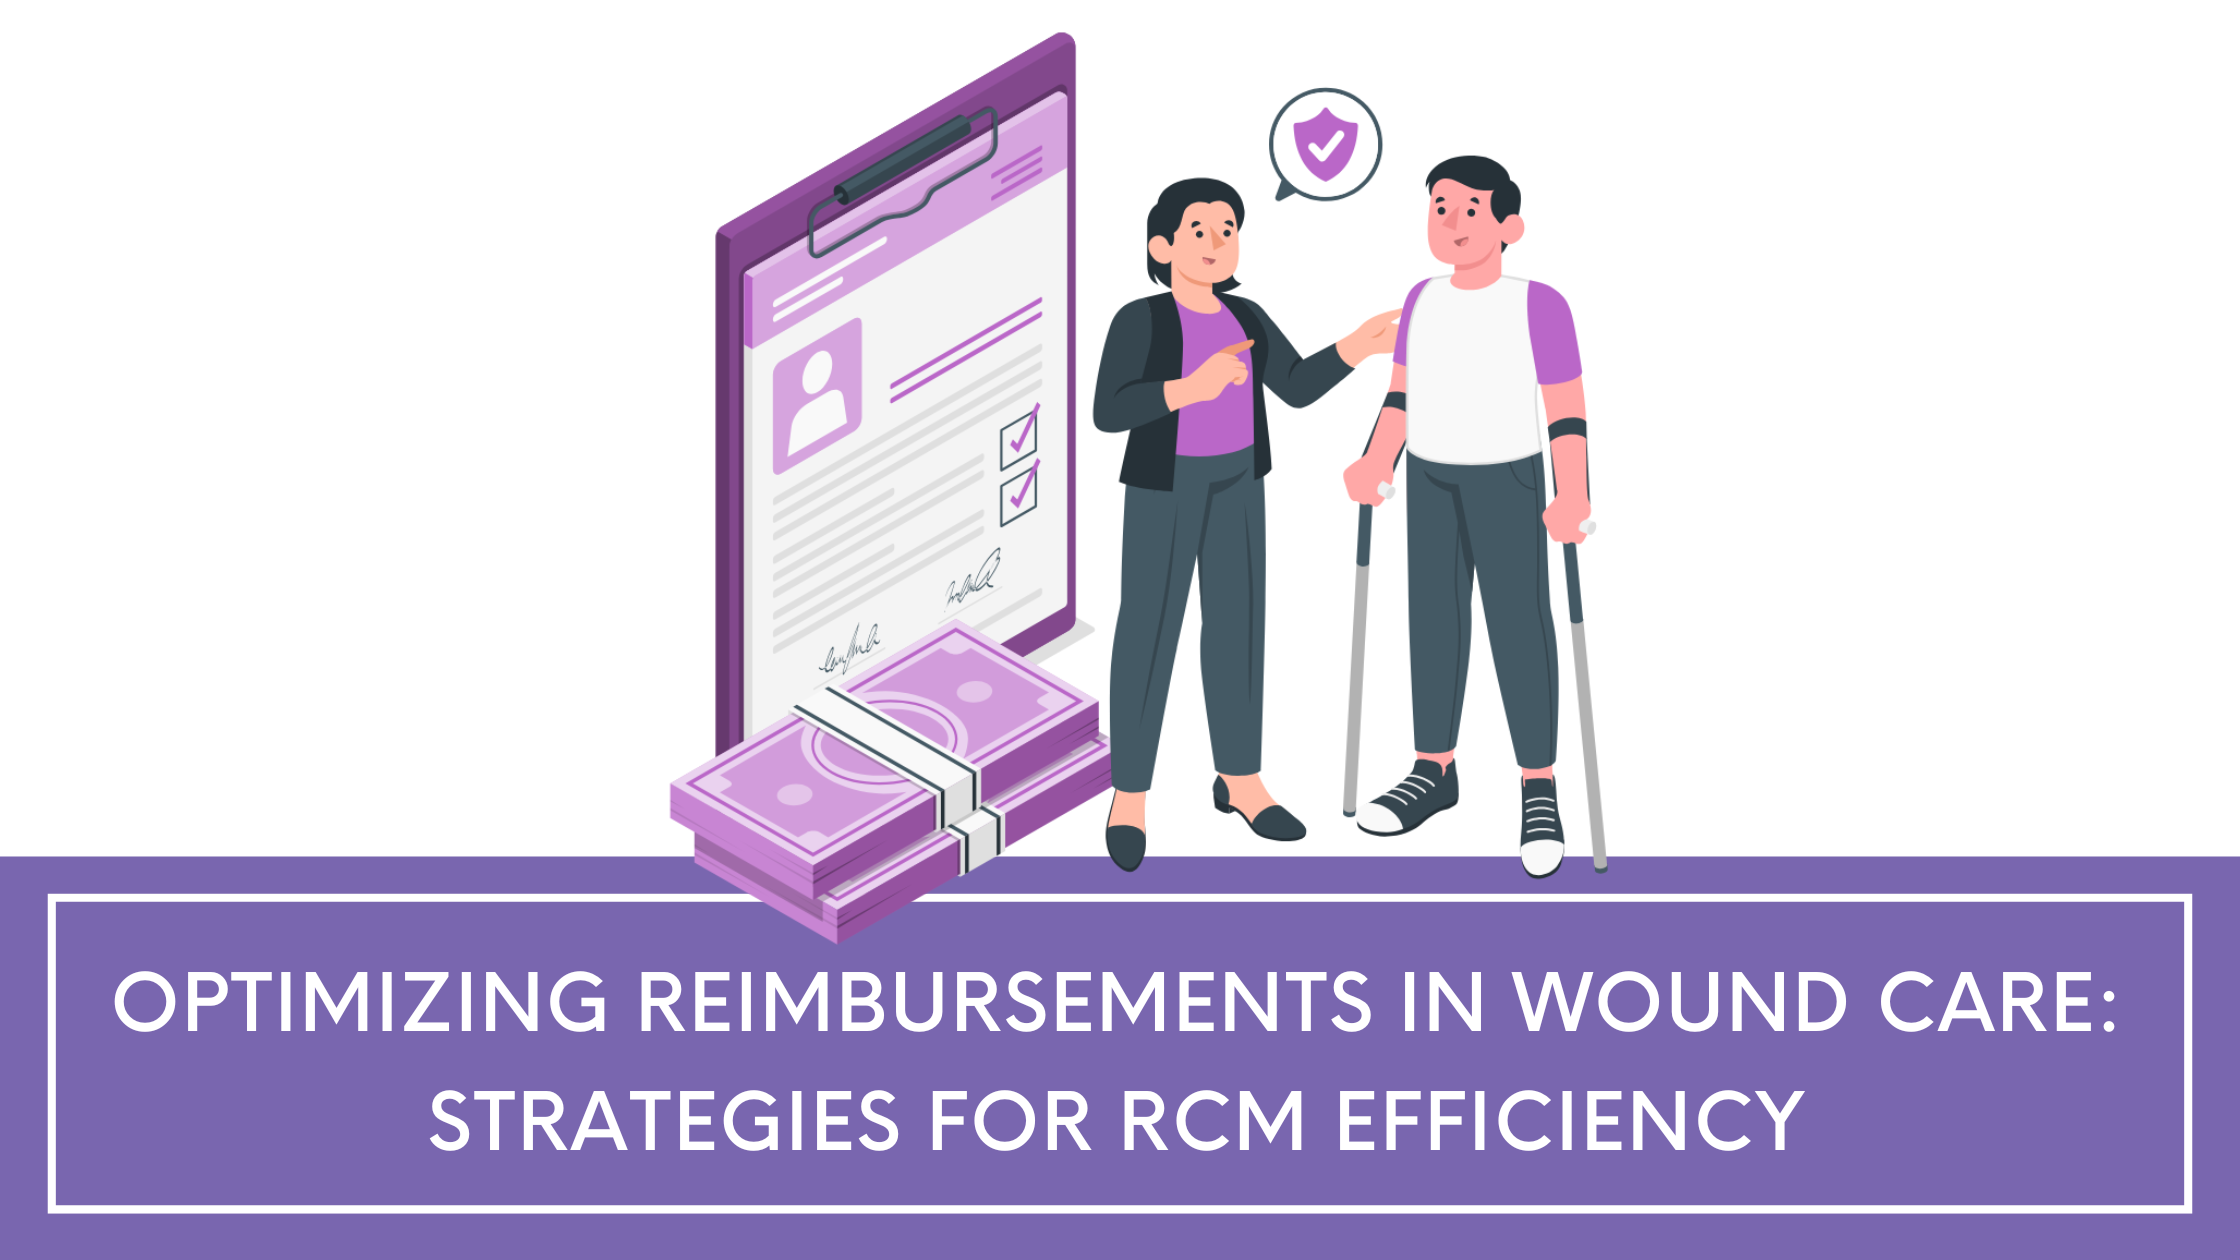 Wound Care Reimbursement Optimization Strategies